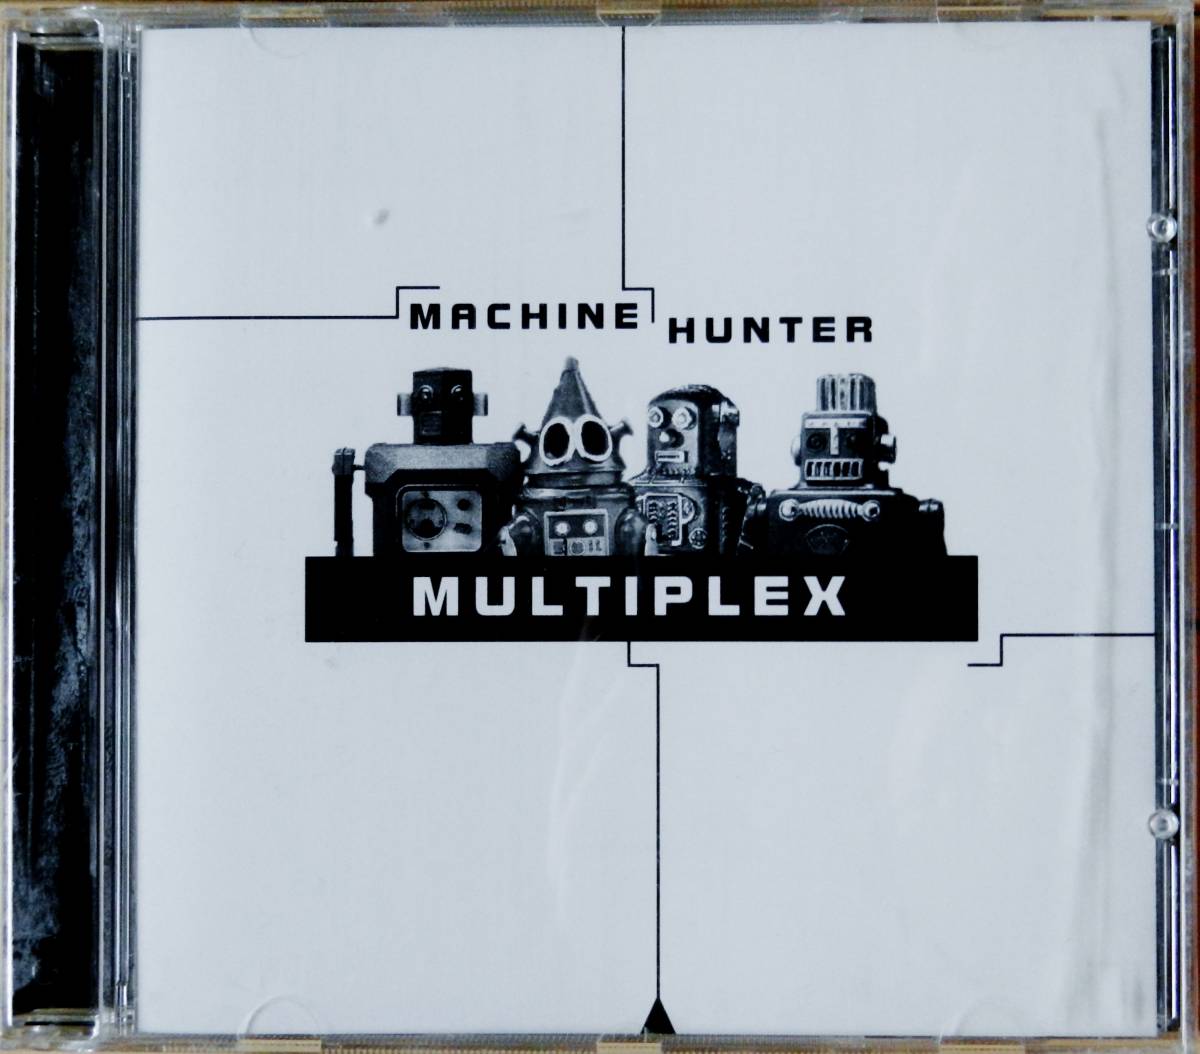 [CD]MULTIPLEX / MACHINE HUNTER * мульти- p Rex / машина * Hunter 